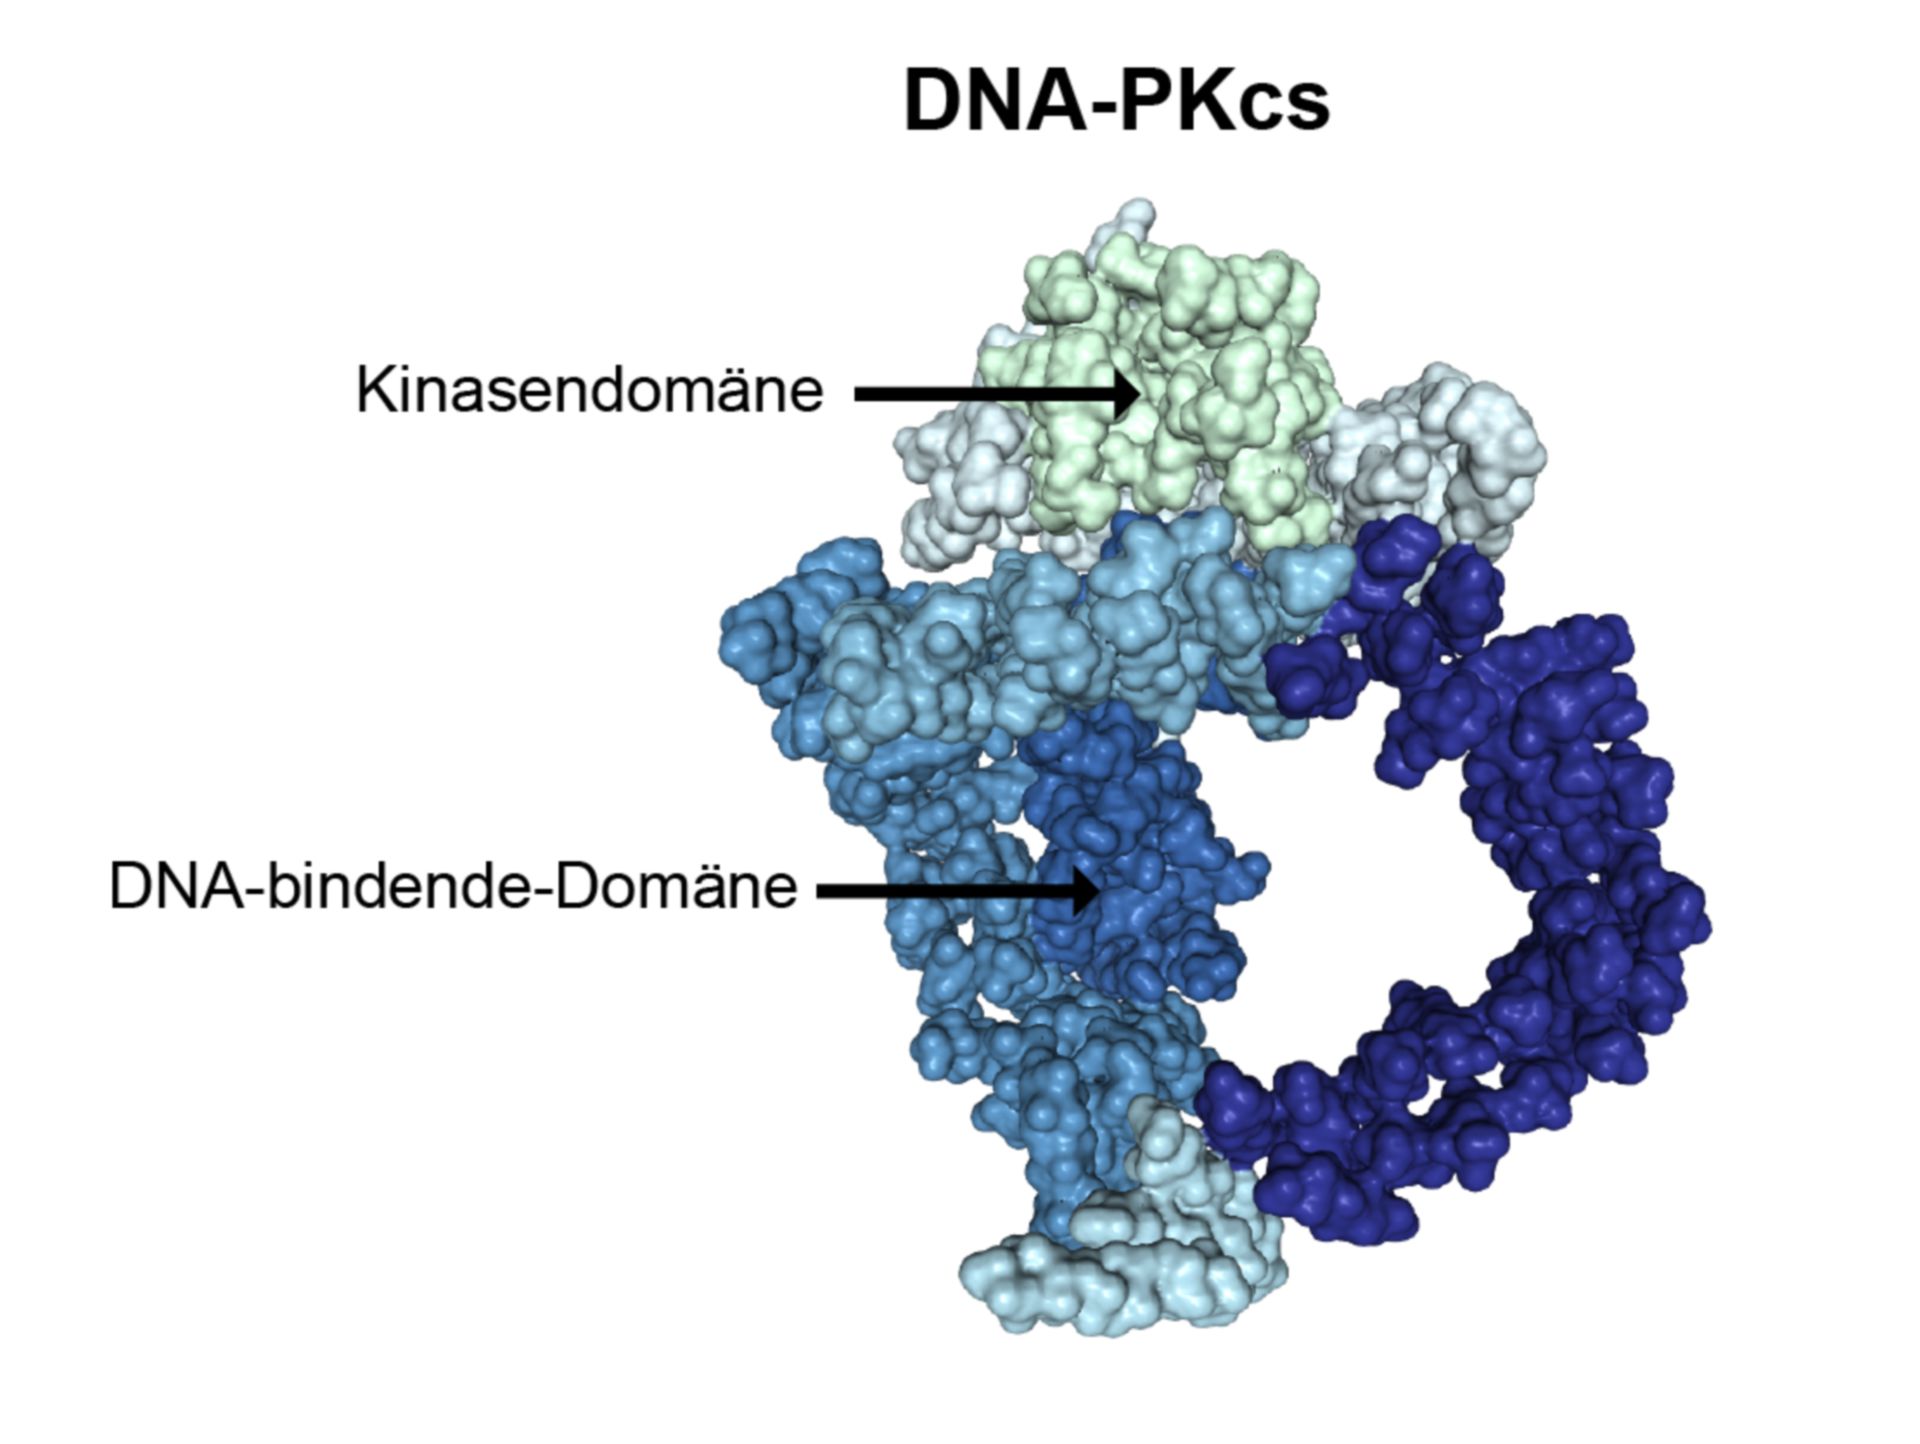 Proteinstruktur der DNA-PKcs